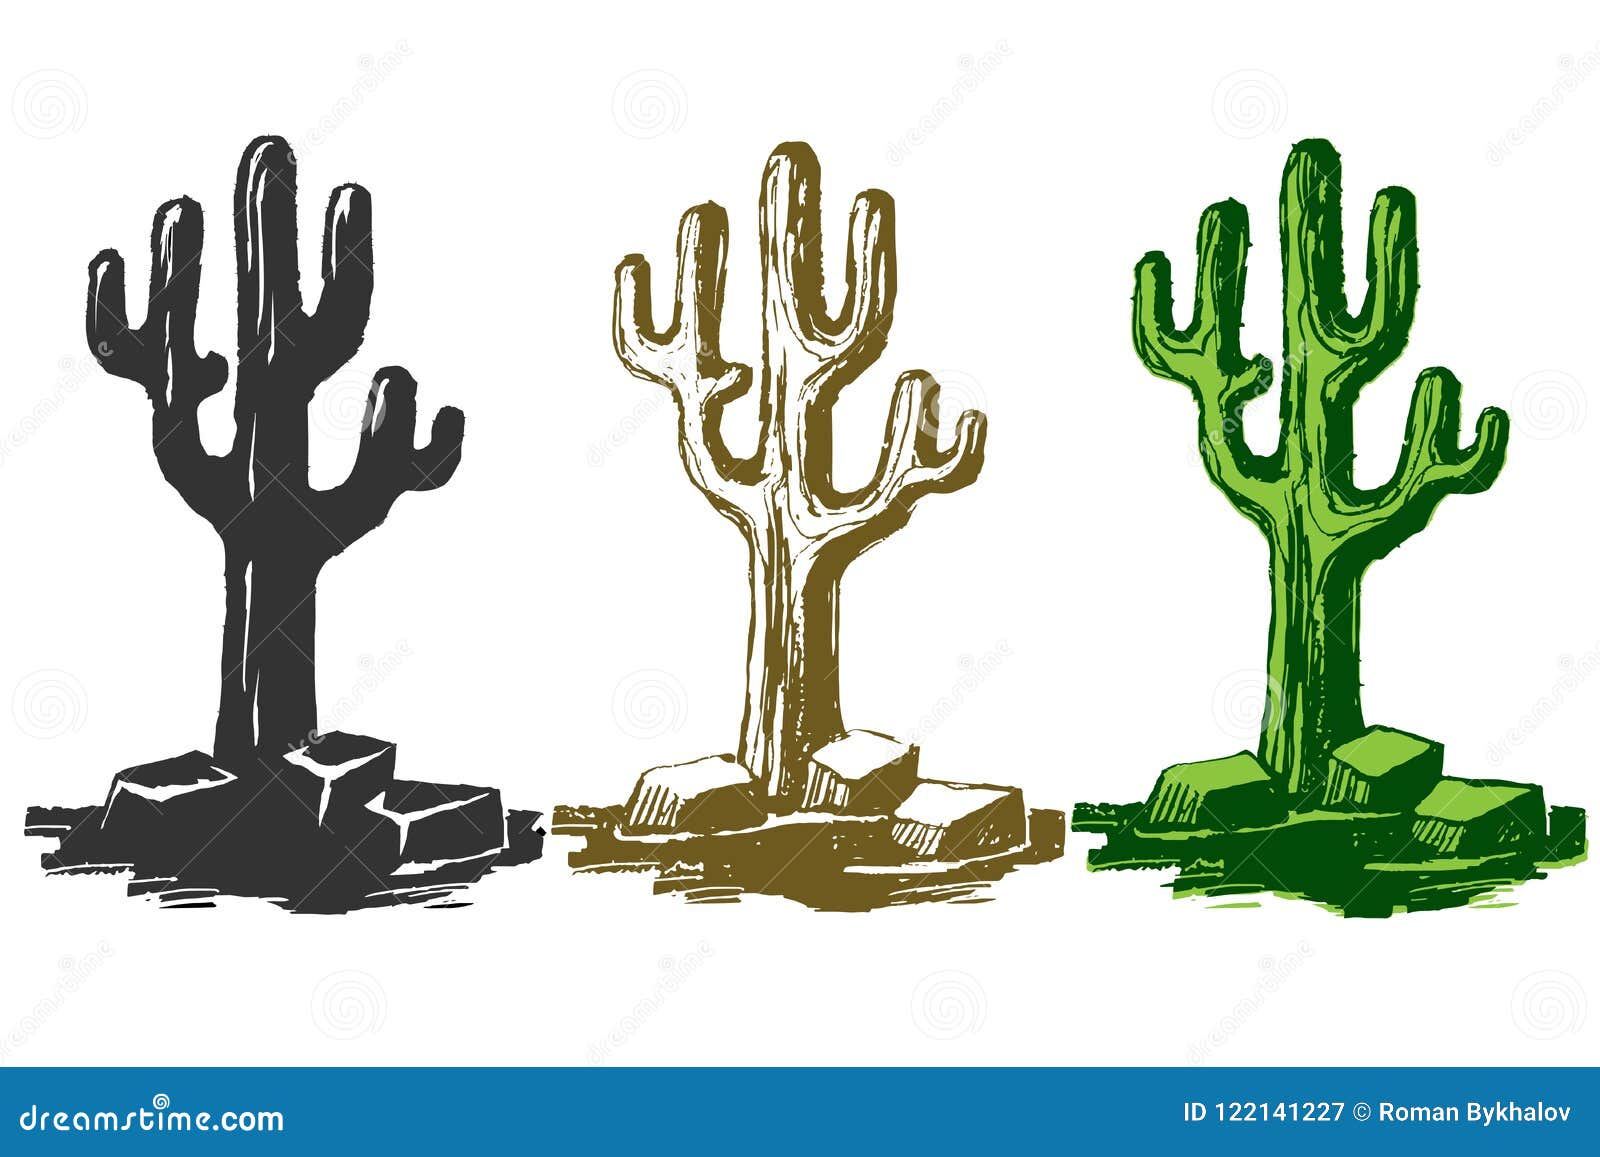 carnegiea set. giant caguaro cacti